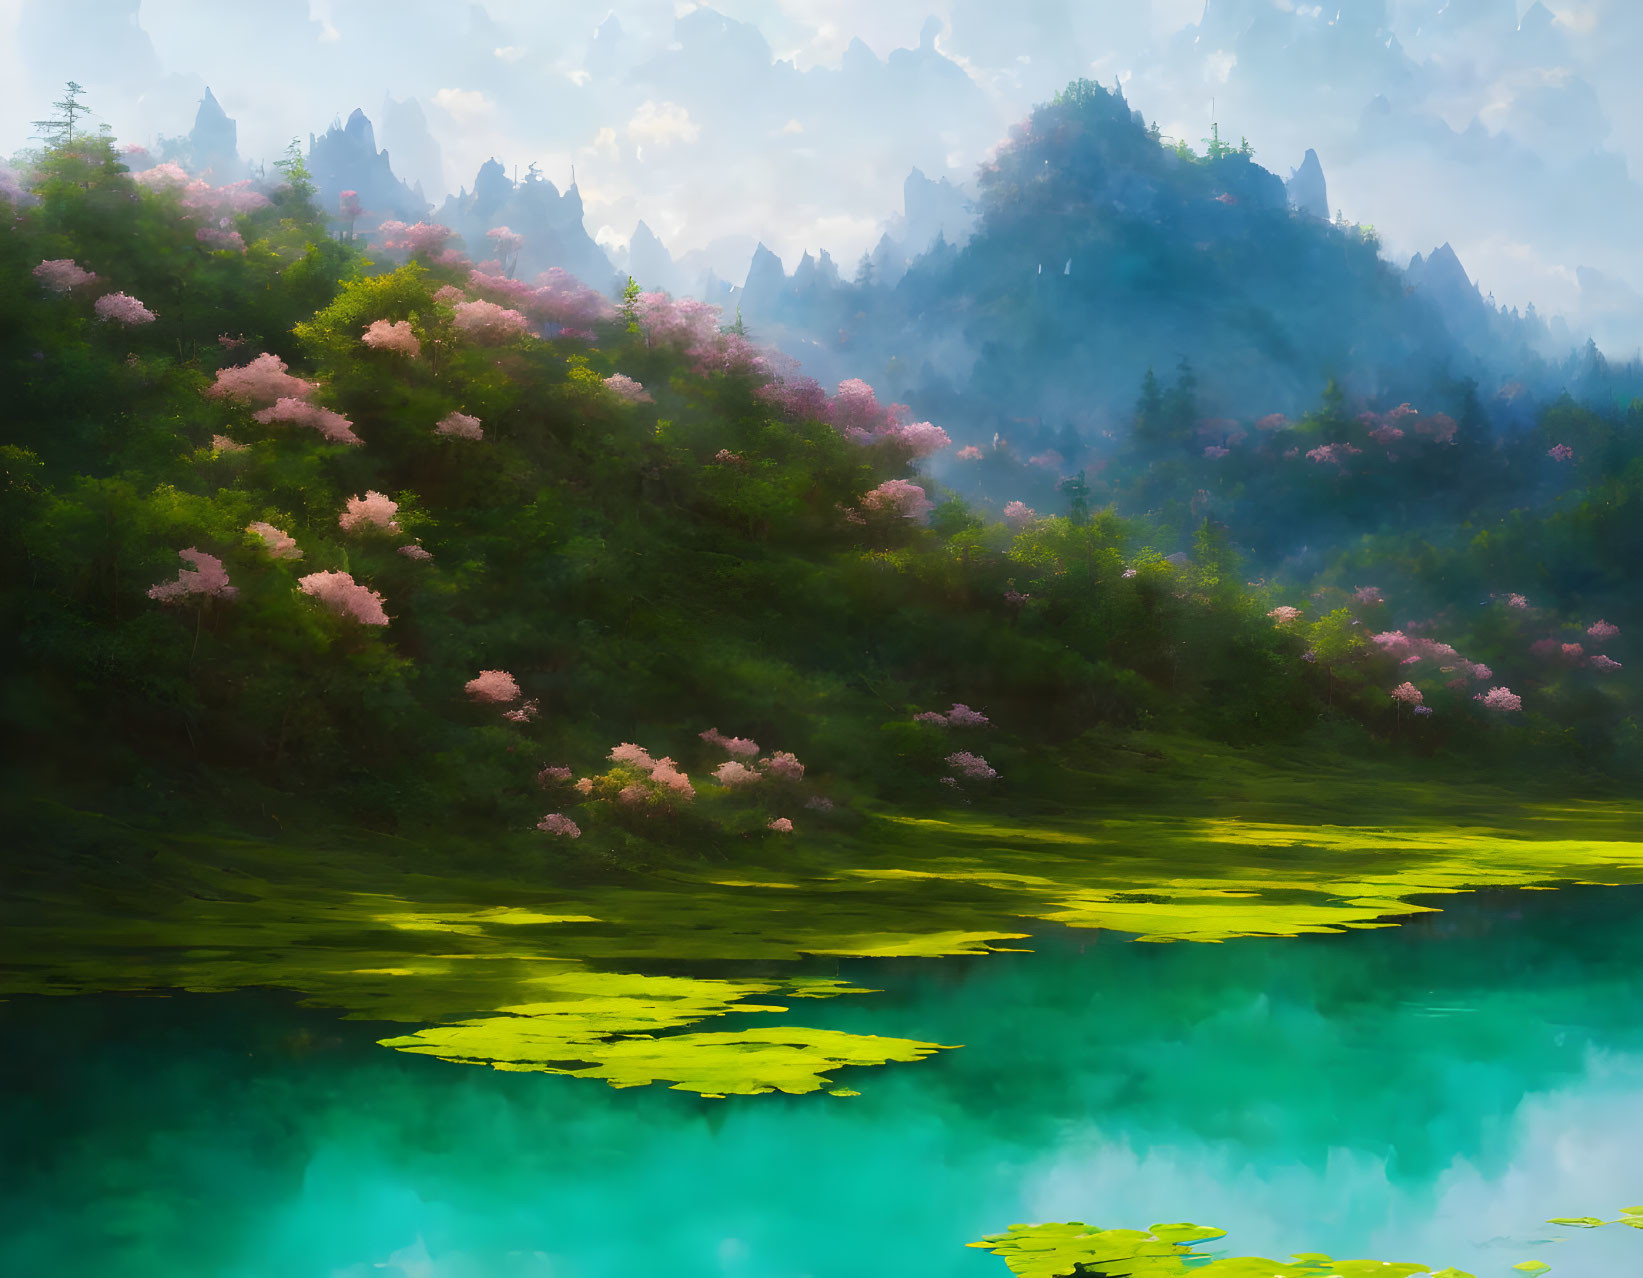 Serene lake, pink trees, castle in misty landscape